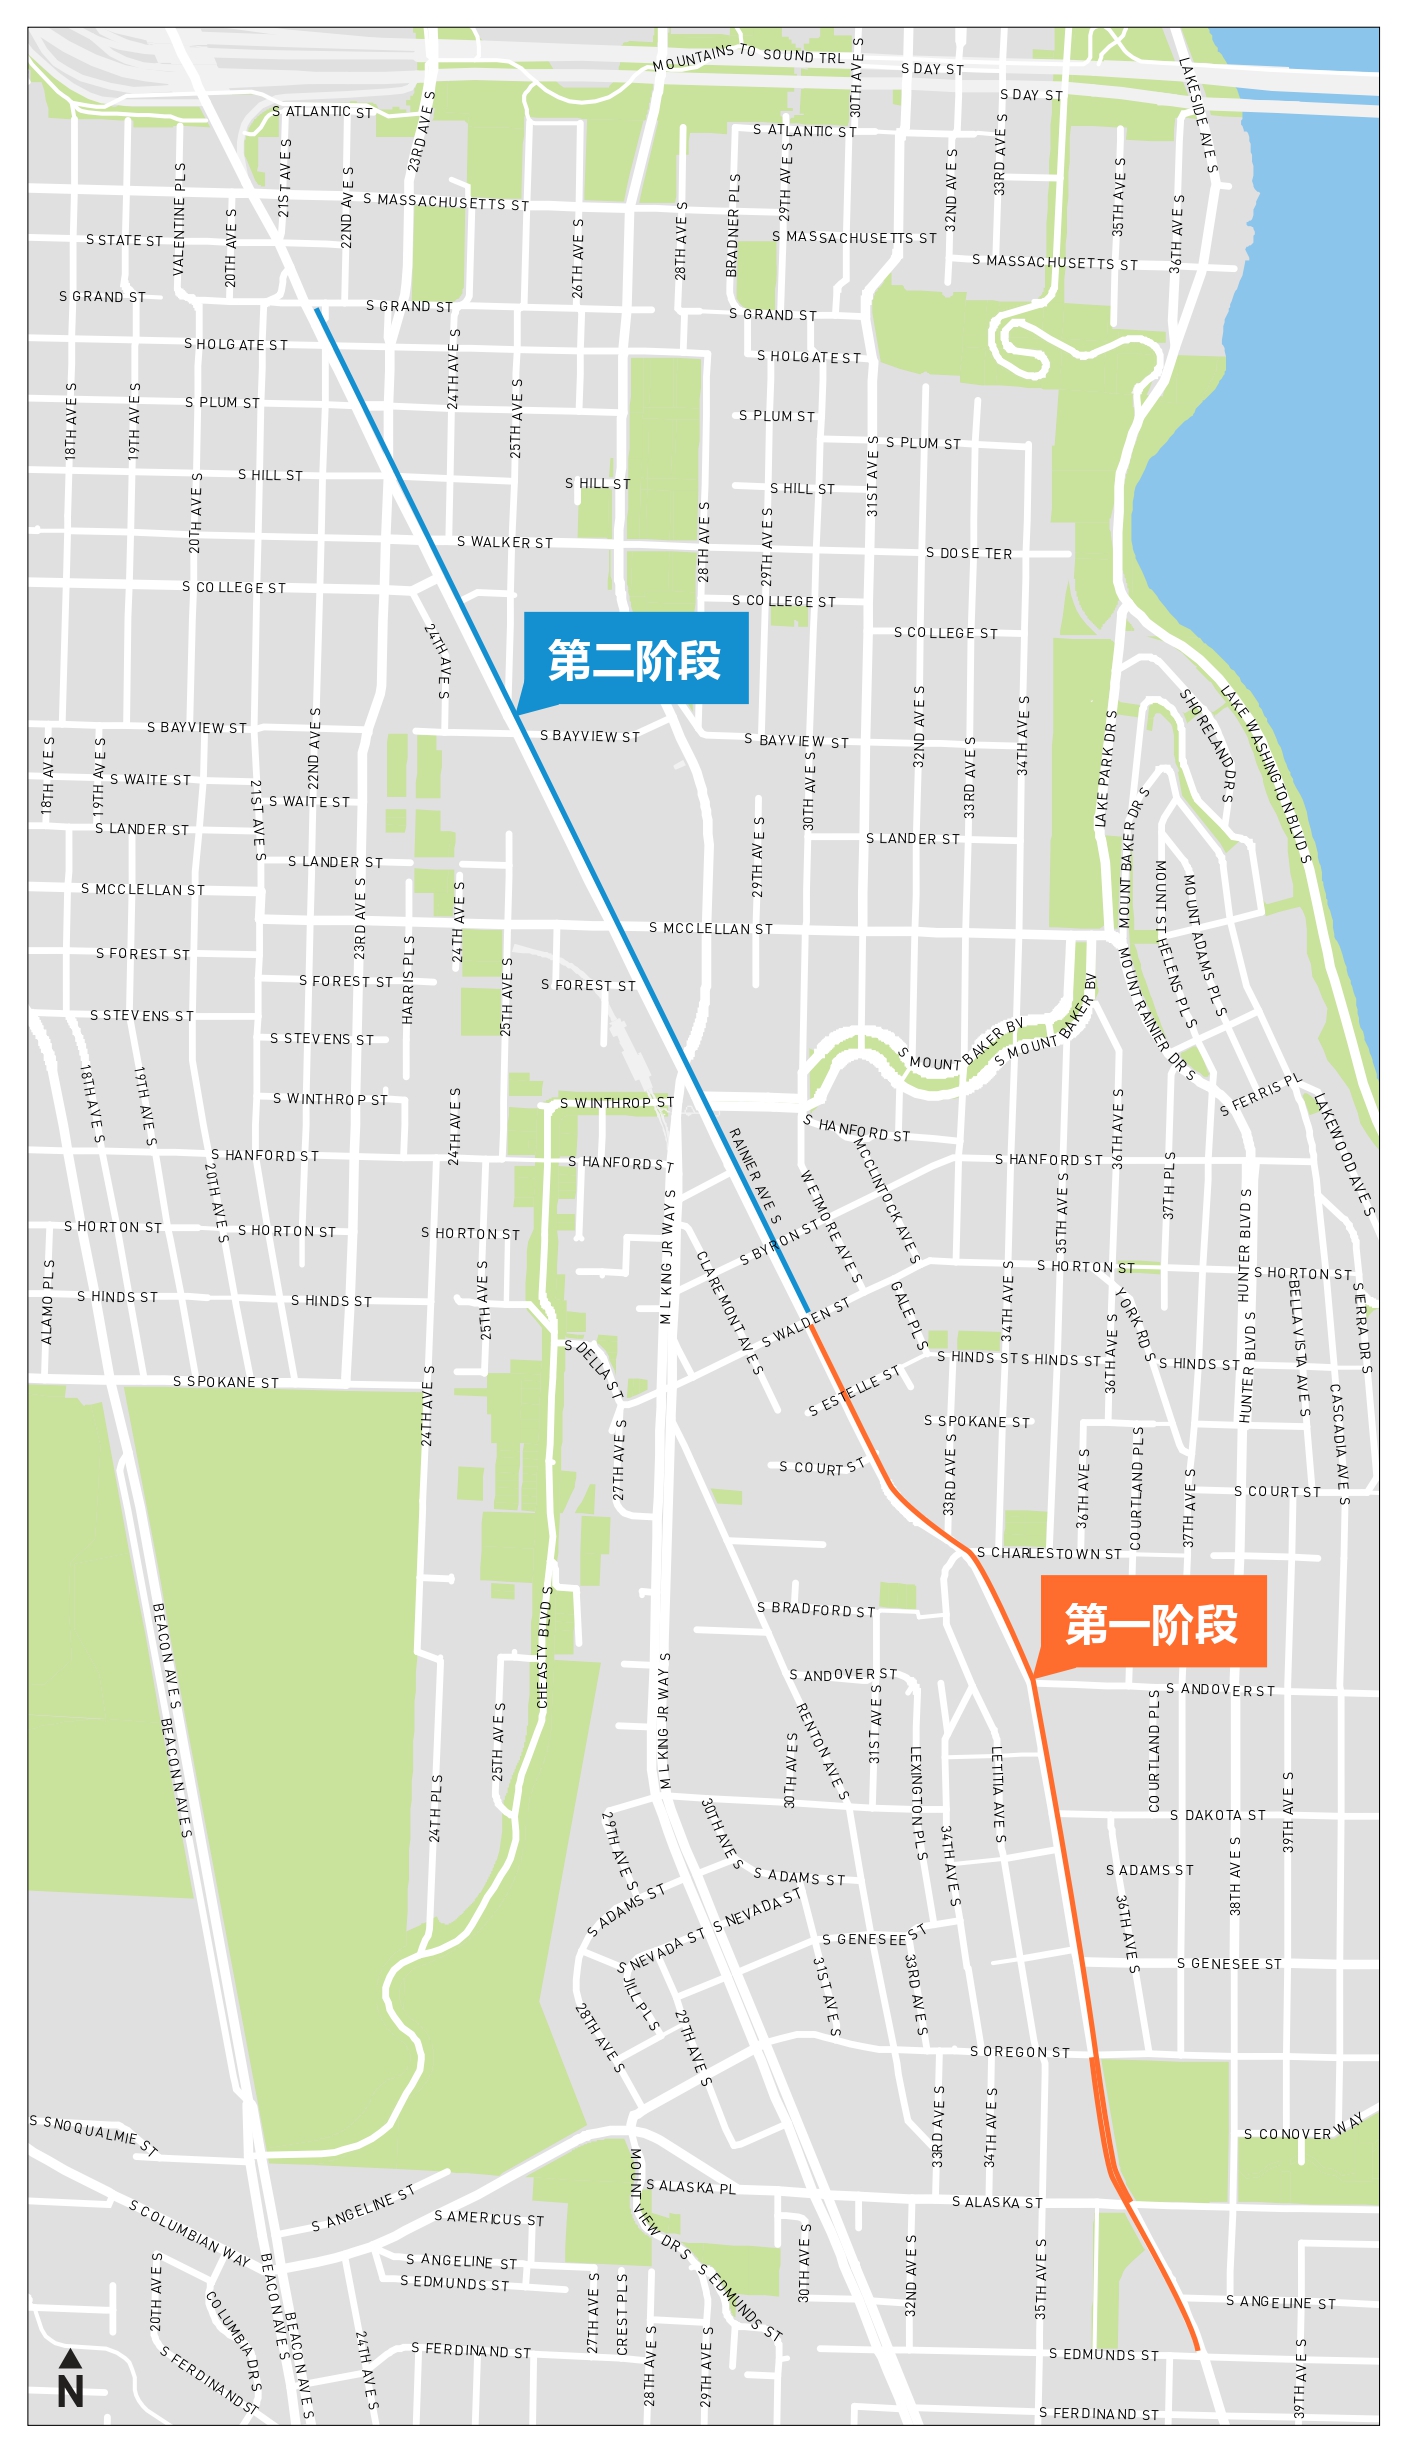 Rainier Ave S 公交专用车道的项目区域地图，第一阶段和第二阶段沿 Rainier Ave S 上行标示。